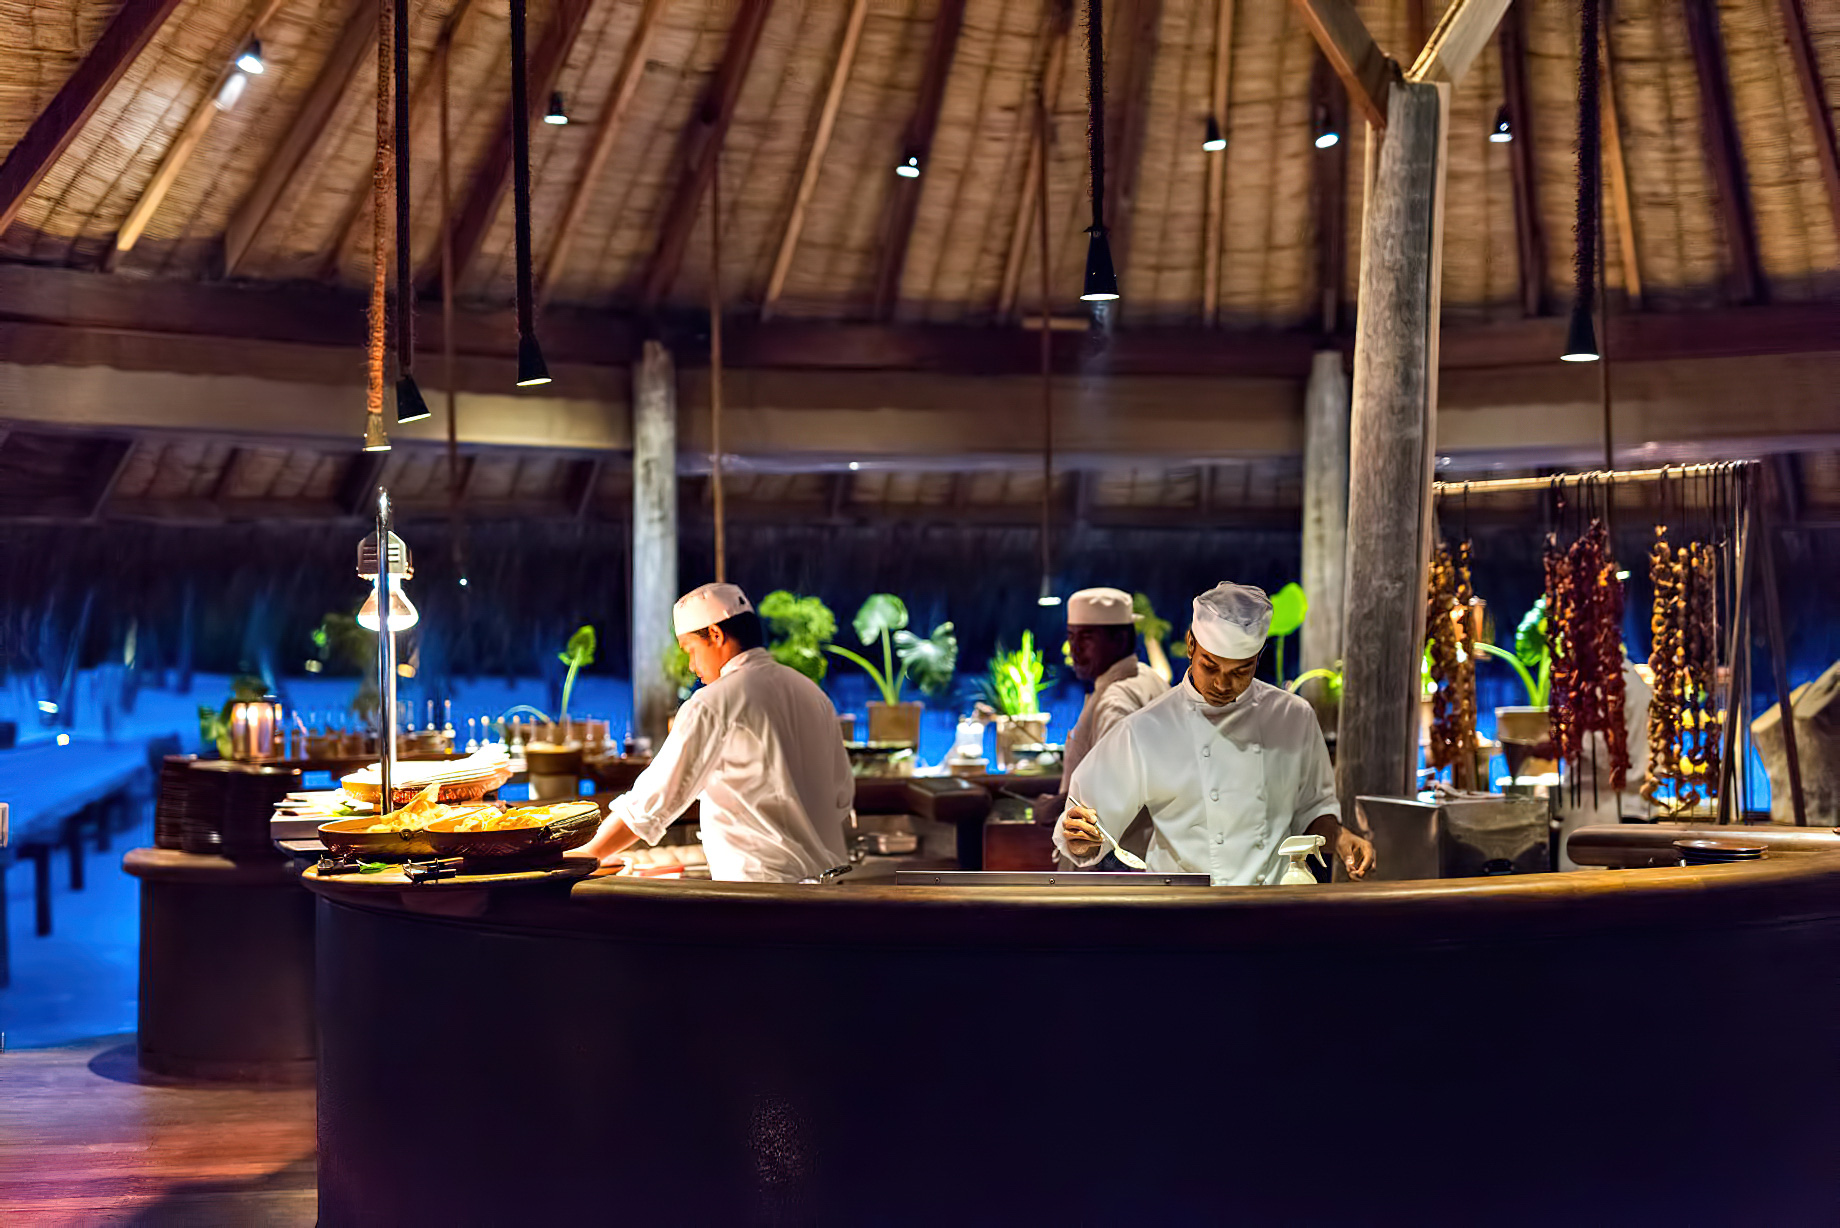 Gili Lankanfushi Resort – North Male Atoll, Maldives – Restaurant Chefs